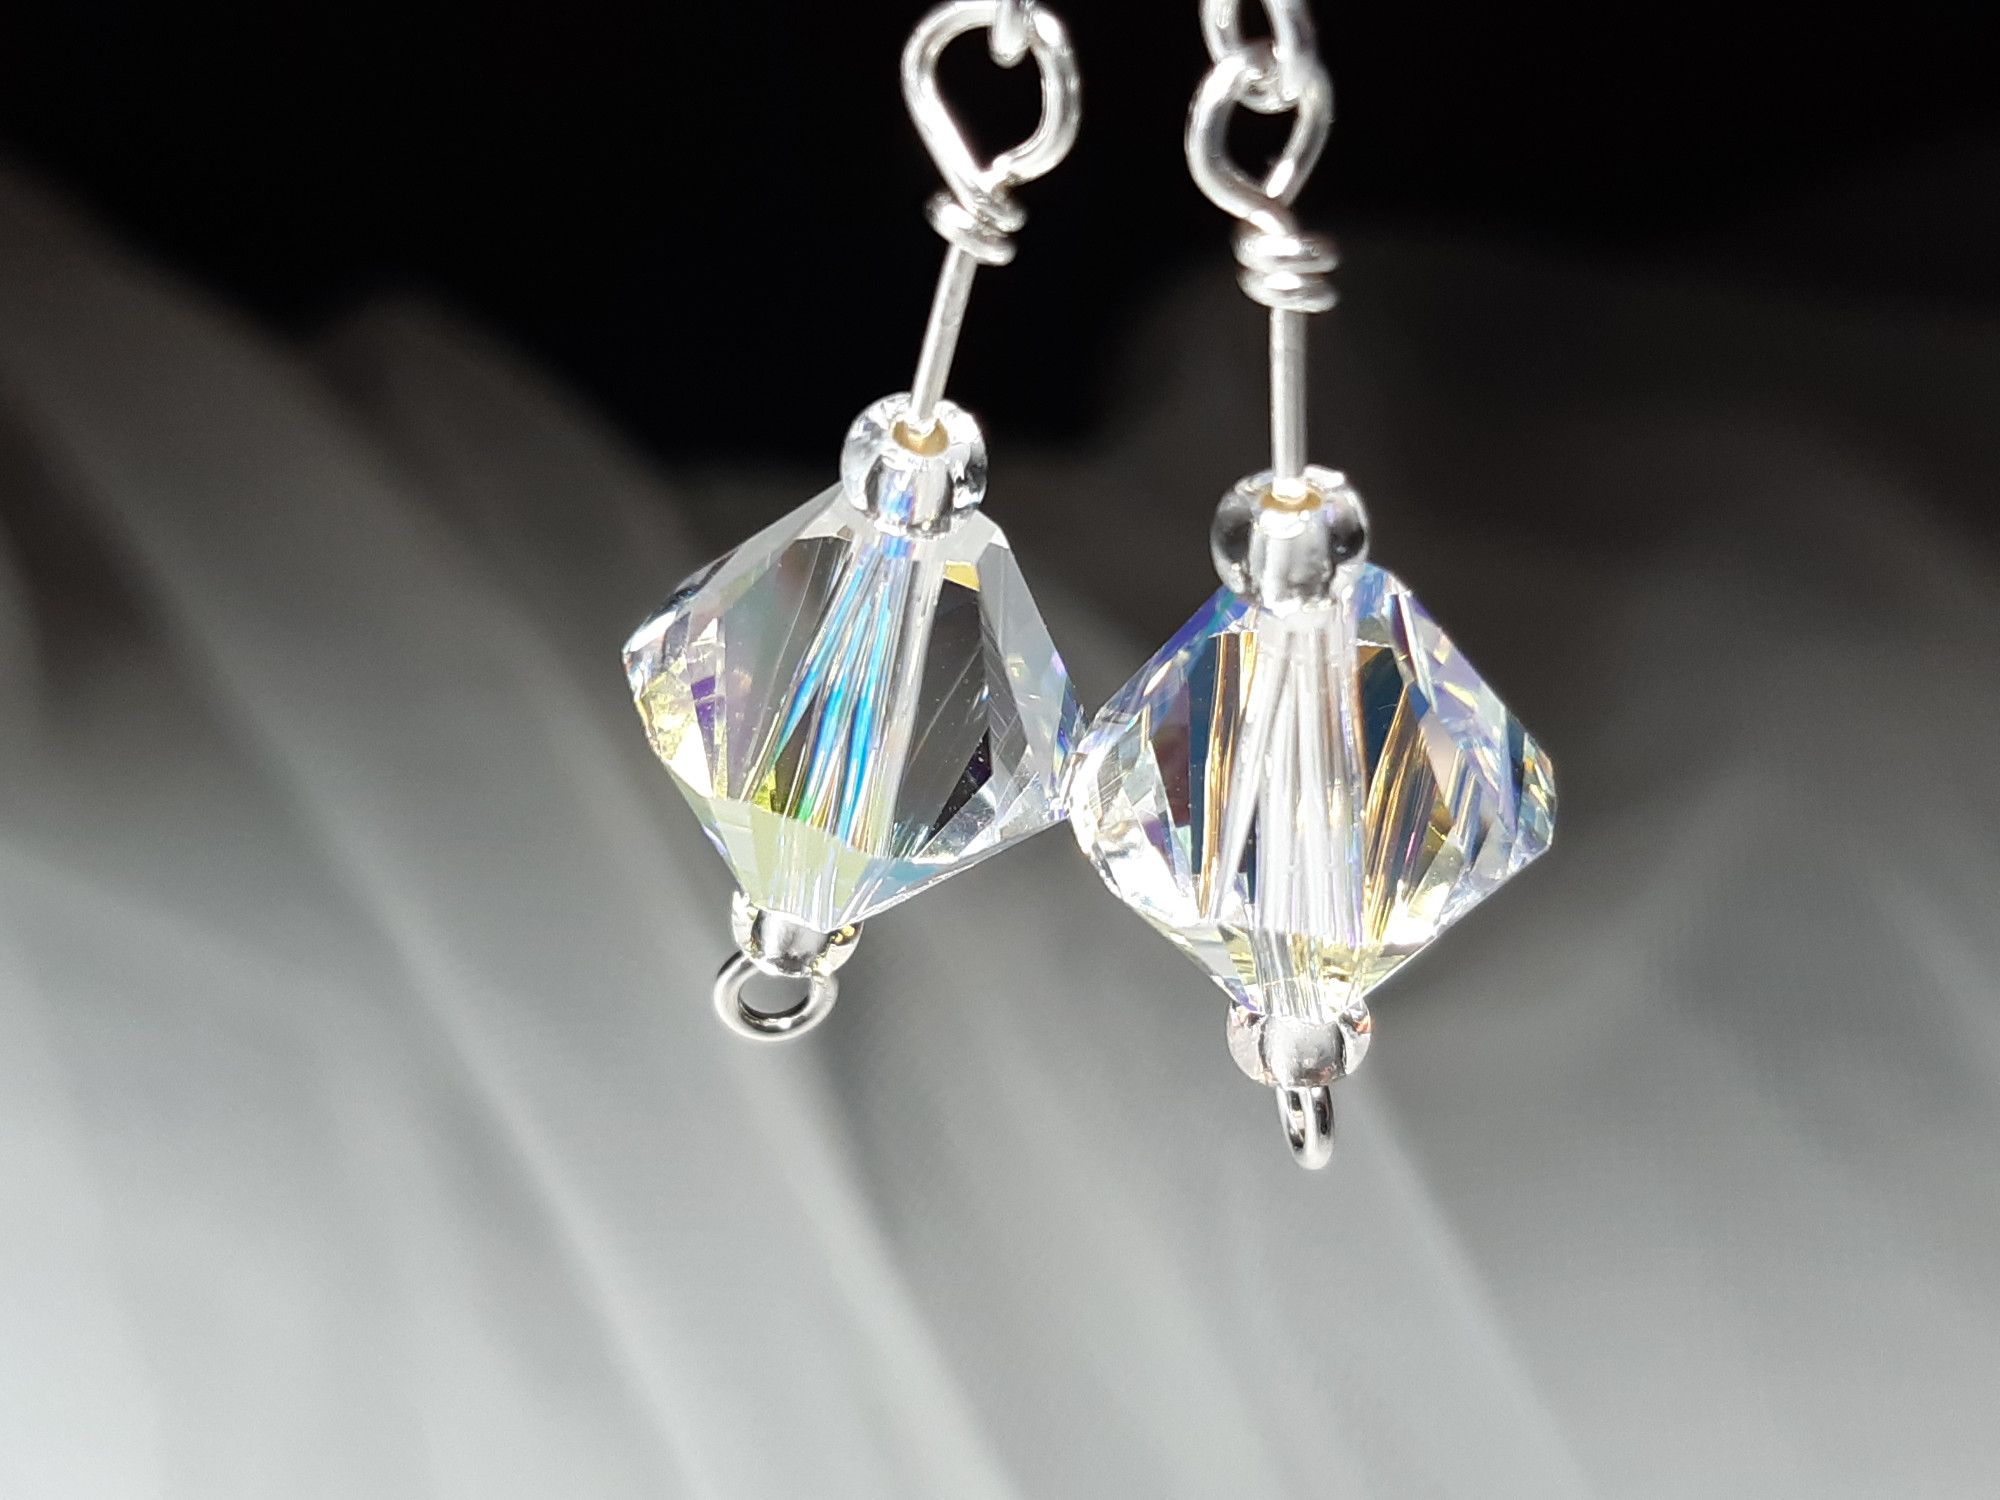 Occasion-wedding-swarovski crystal+sterling silver earrings-4.jpg